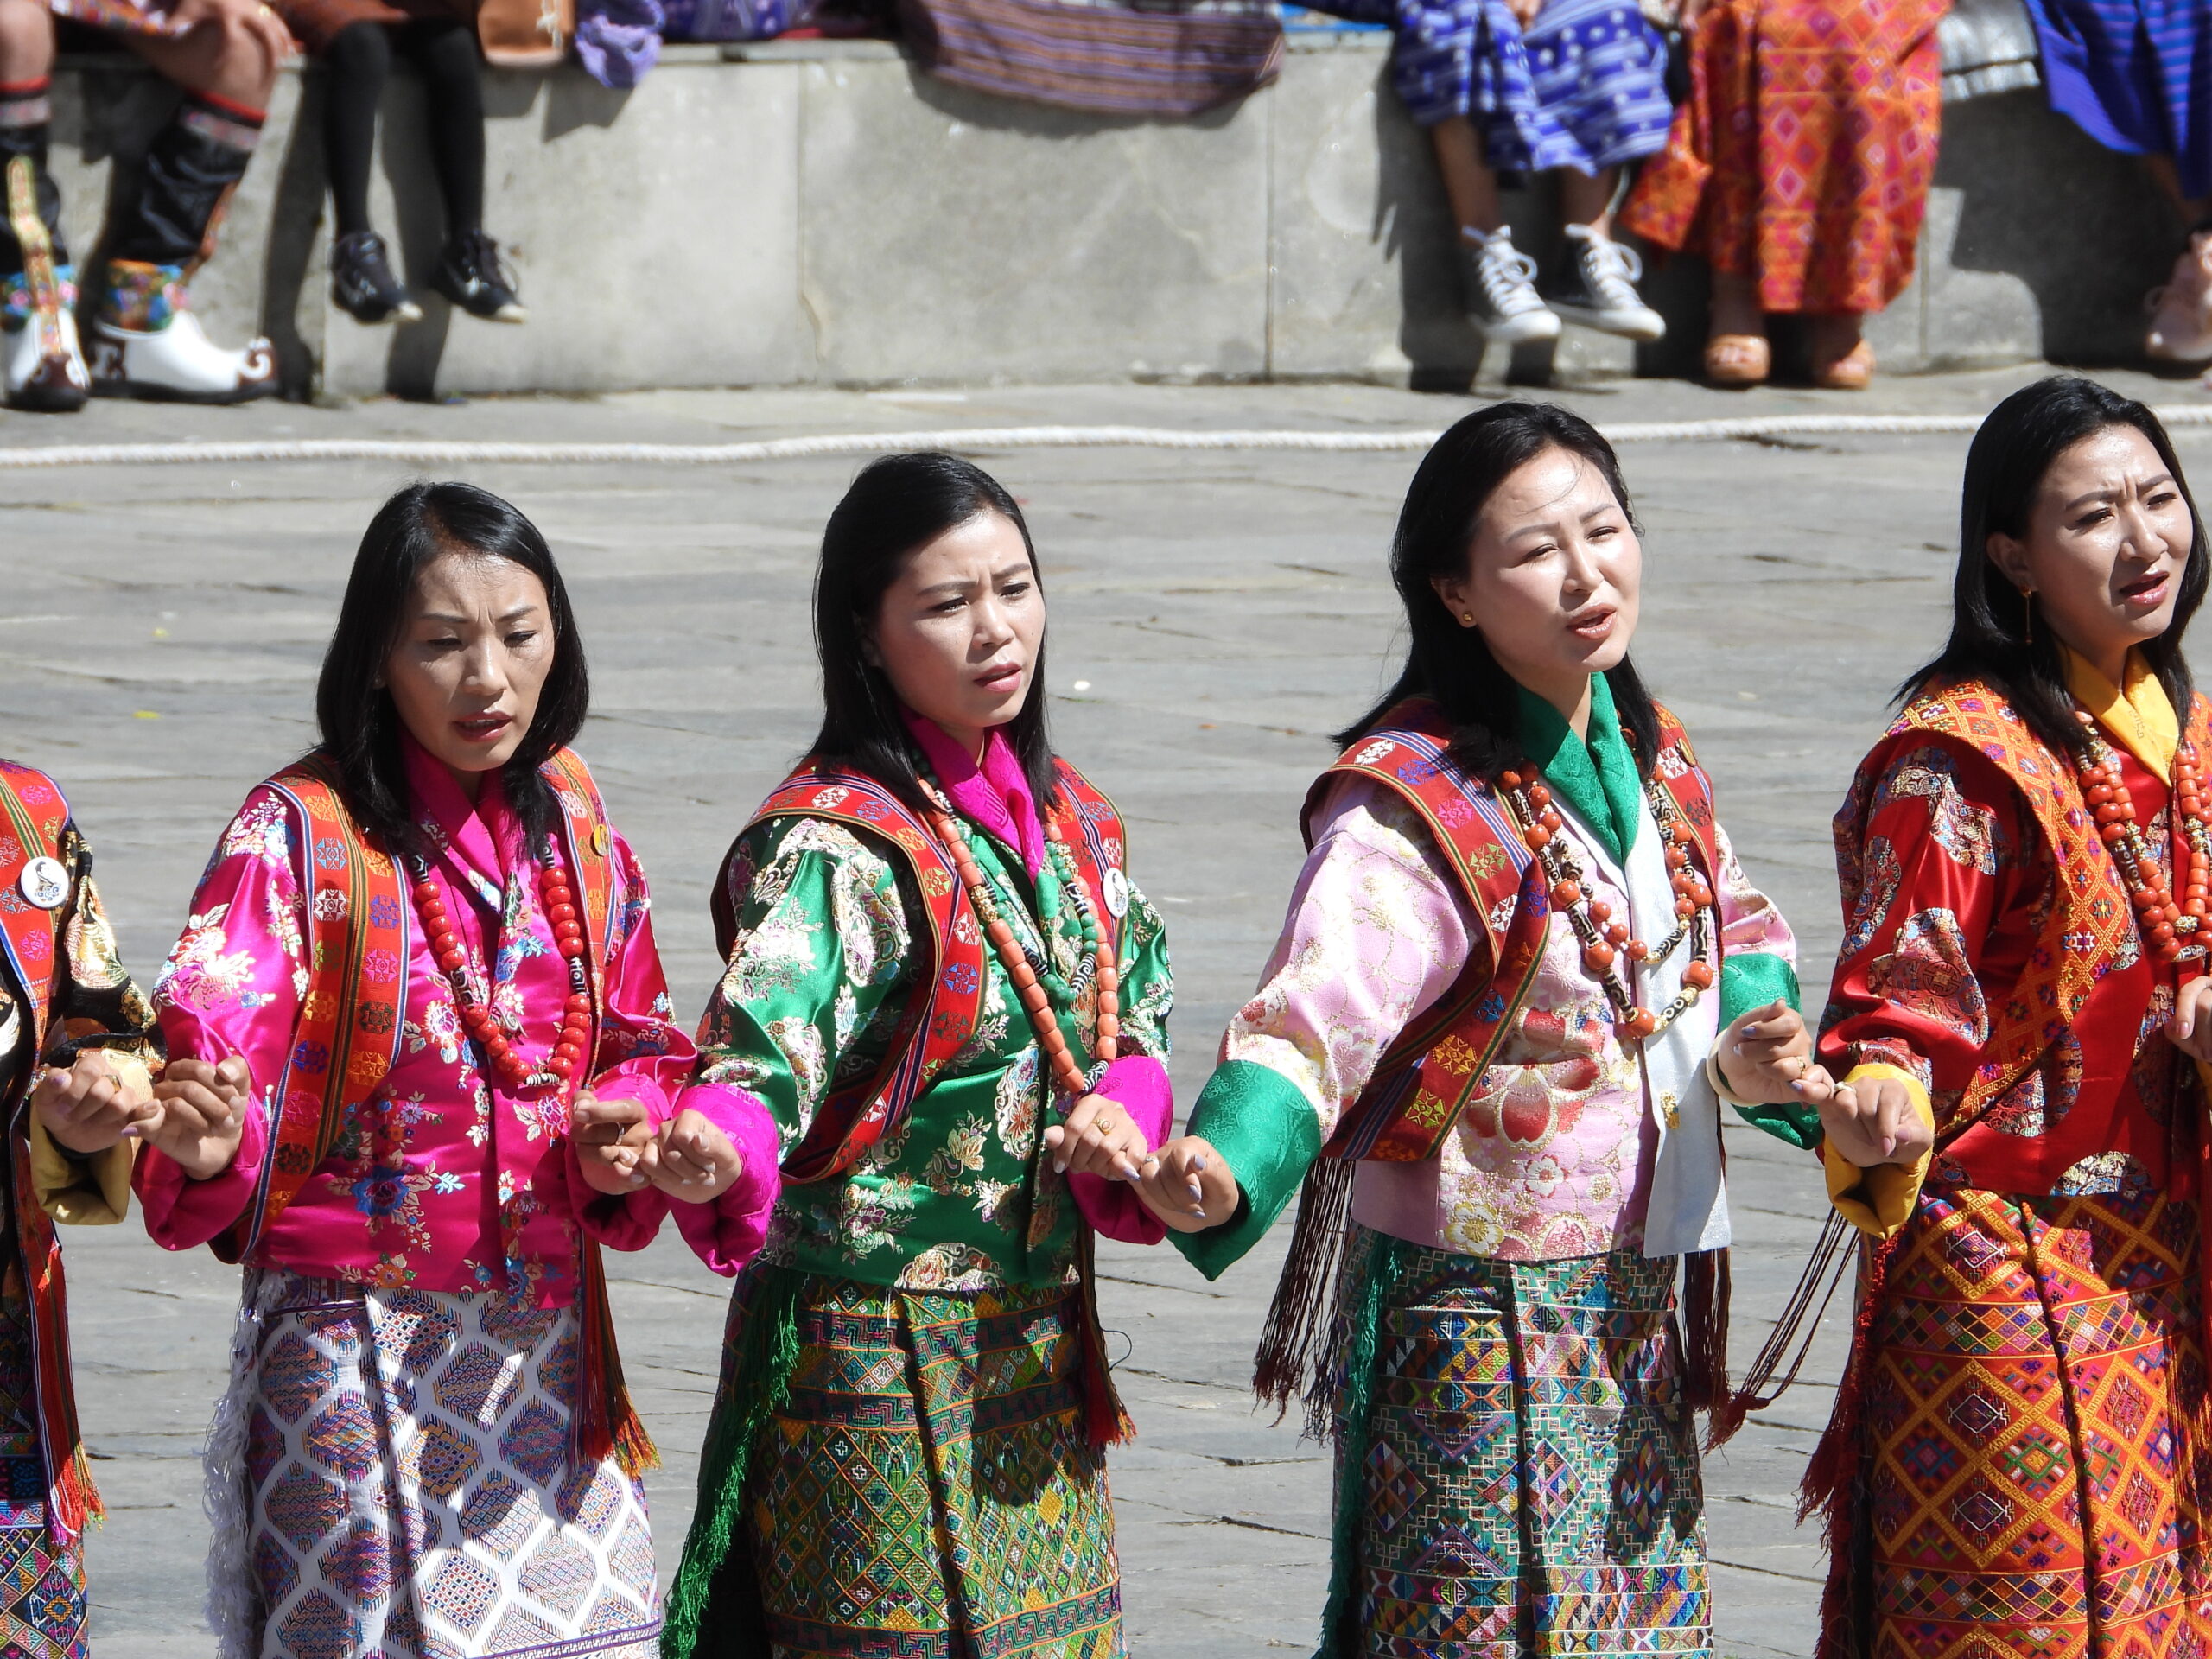 kira, Bhutan's national dress for women